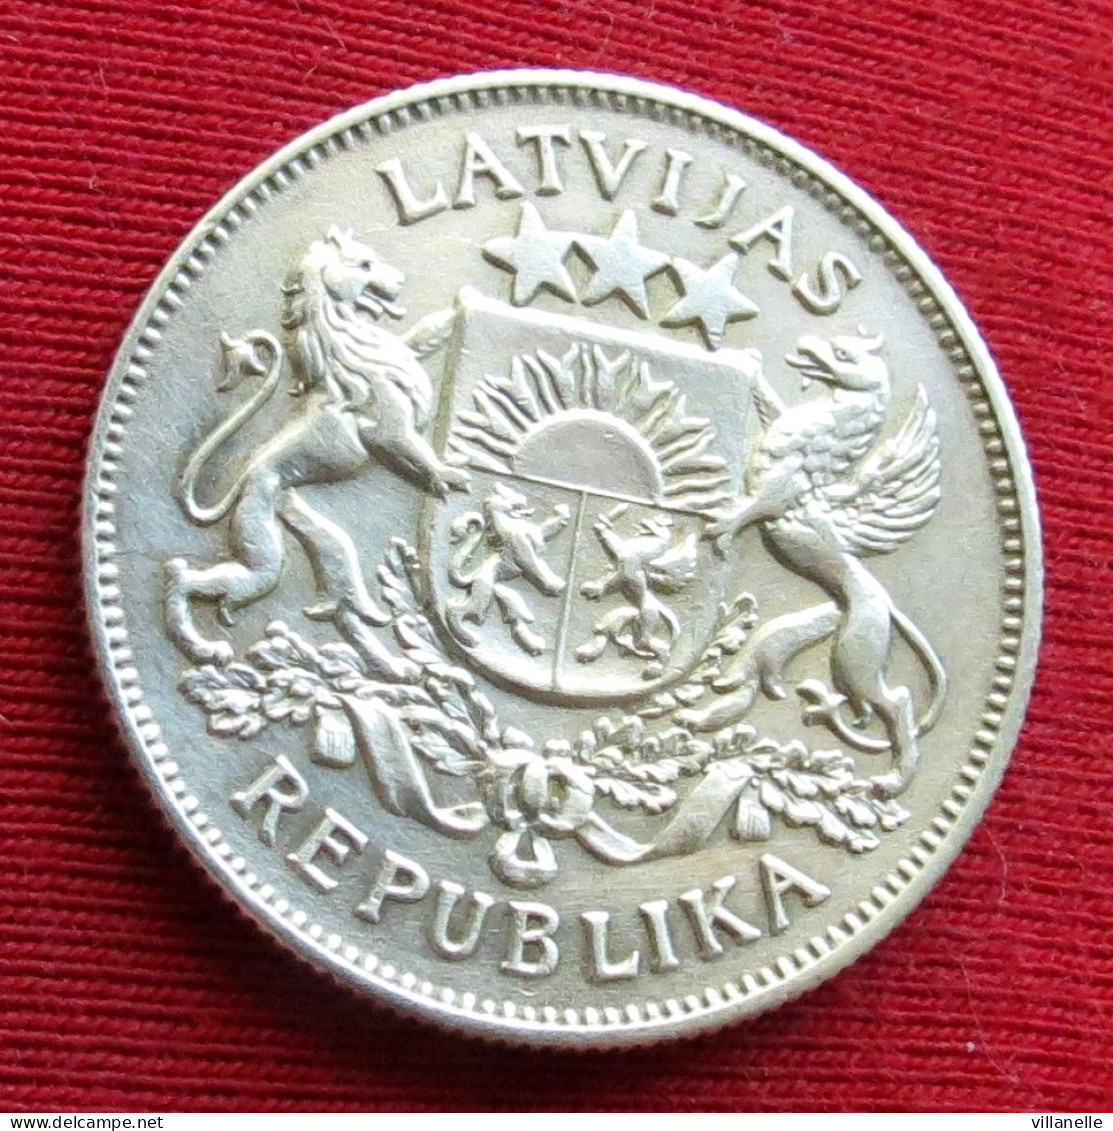 Latvia 2 Lati 1926 W ºº - Latvia